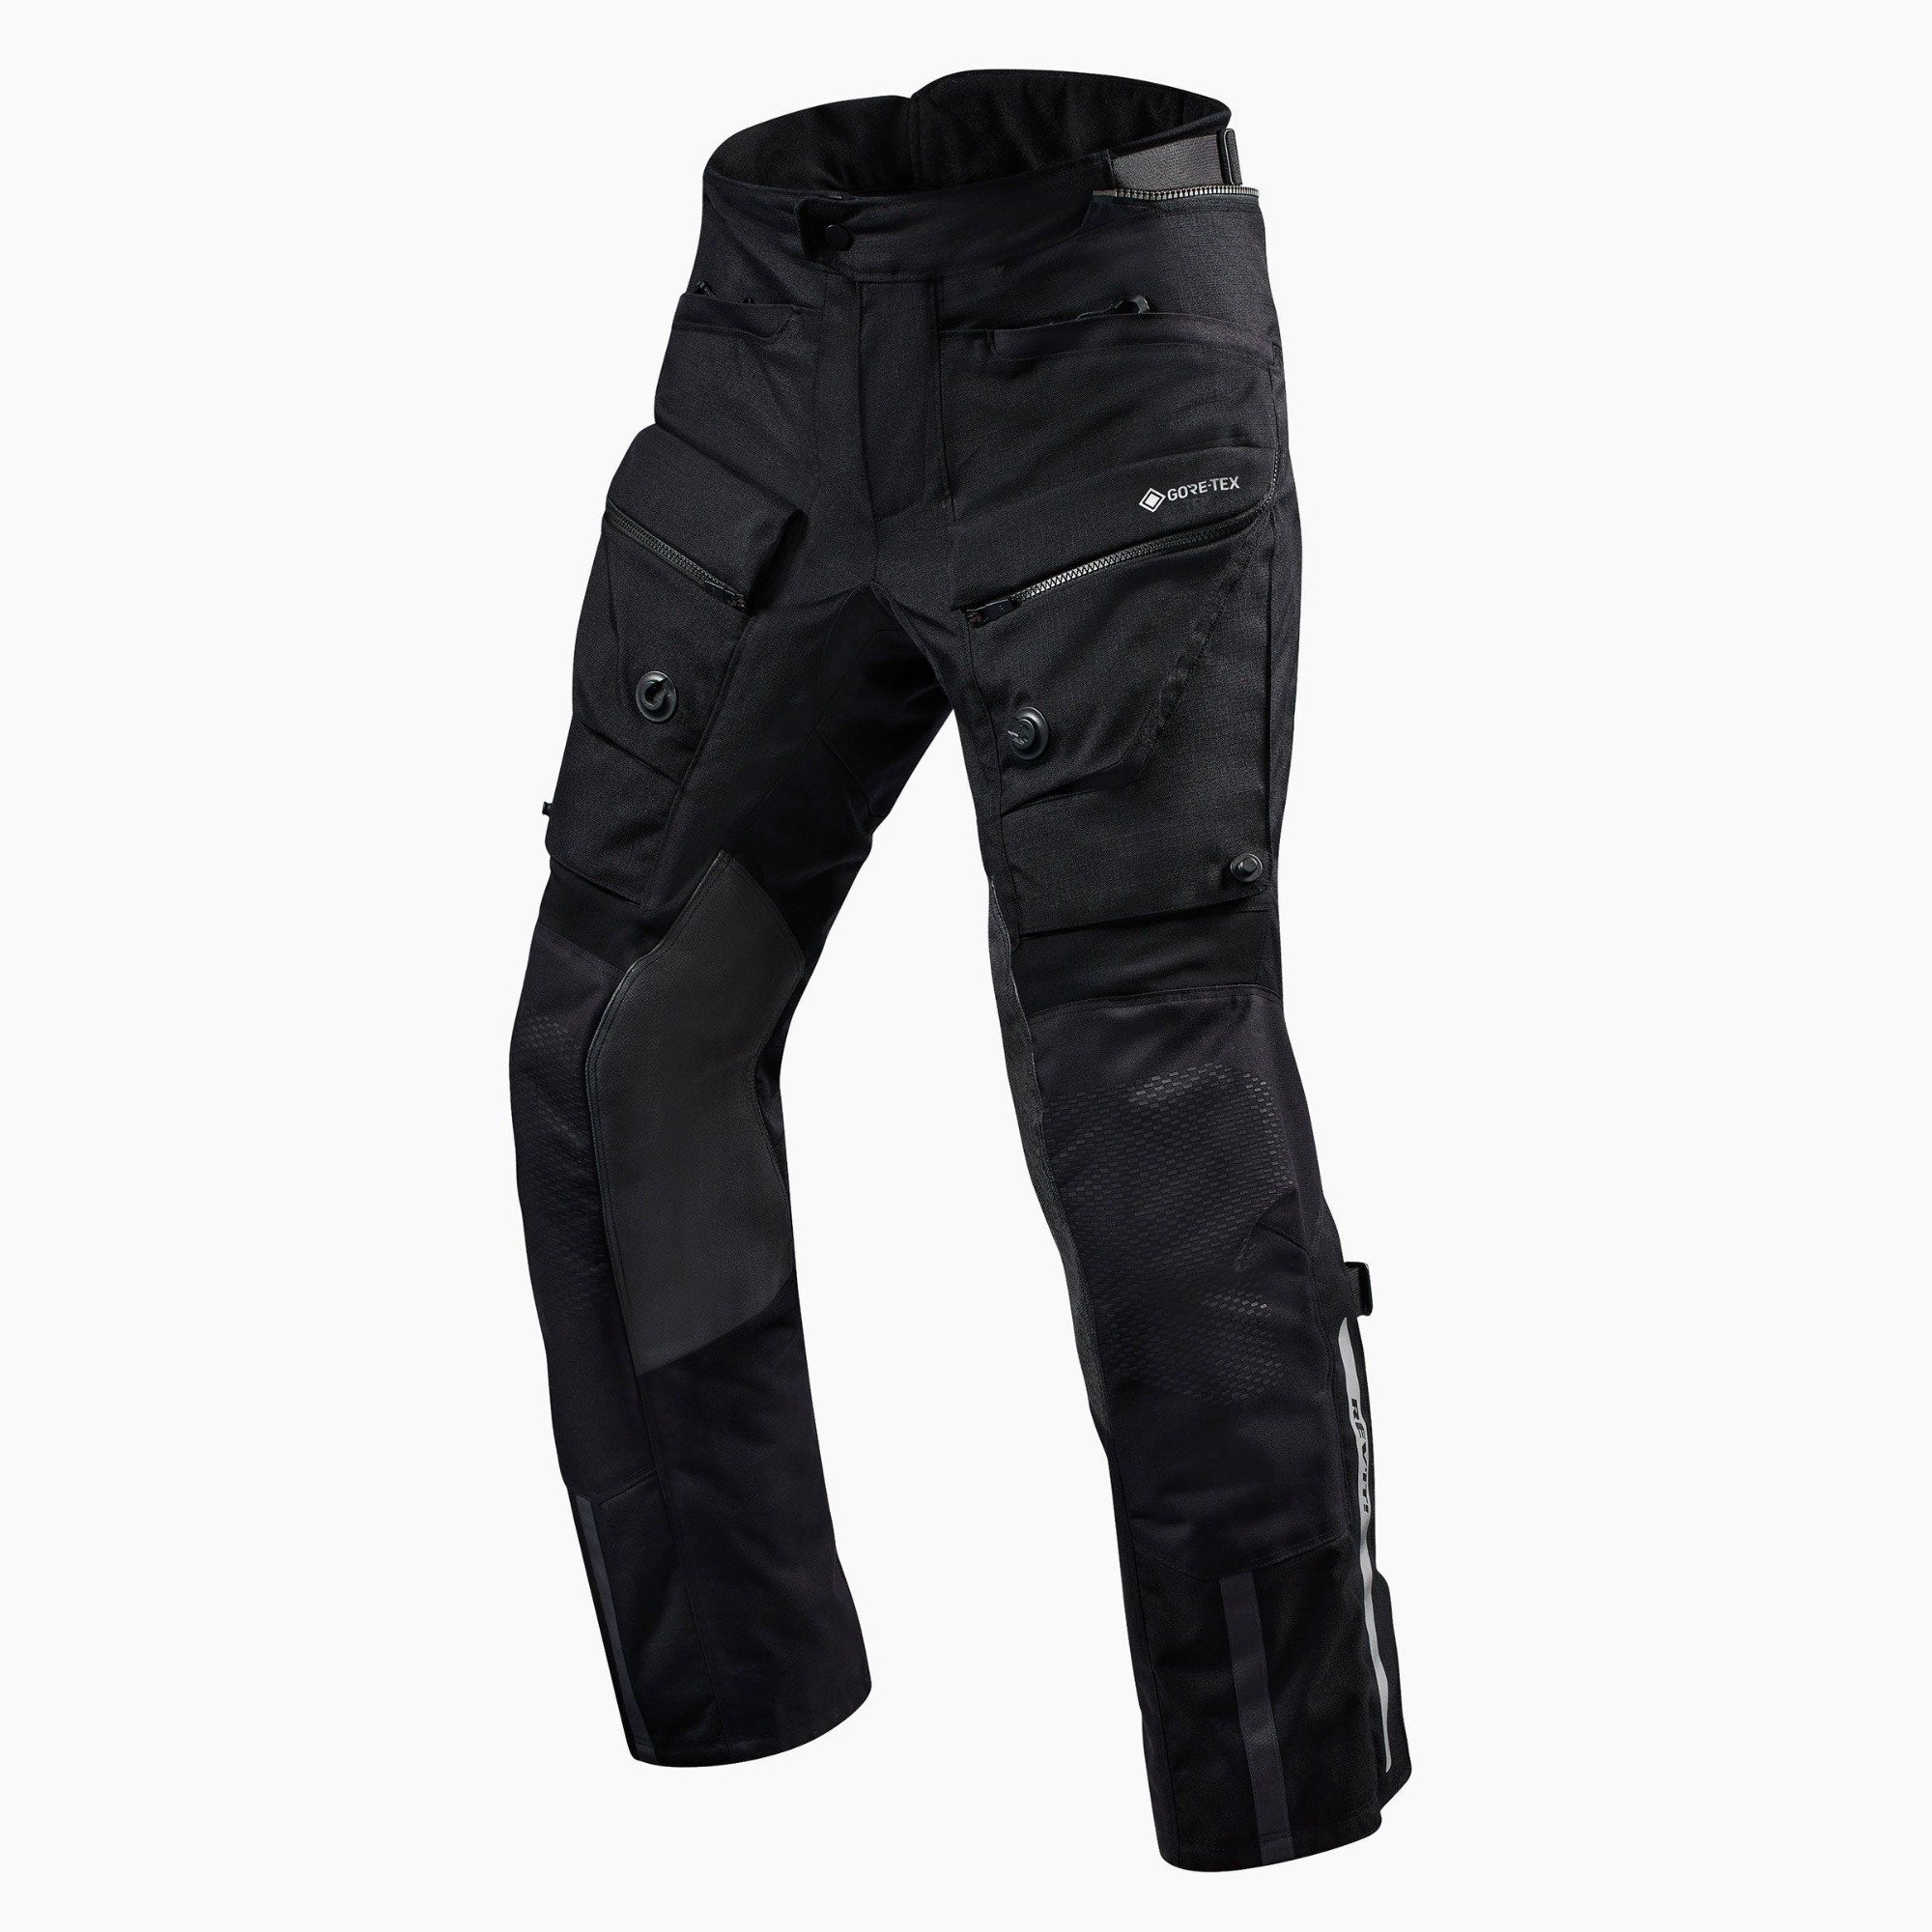 Image of REV'IT! Trousers Defender 3 GTX Black Standard Motorcycle Pants Size L ID 8700001319812